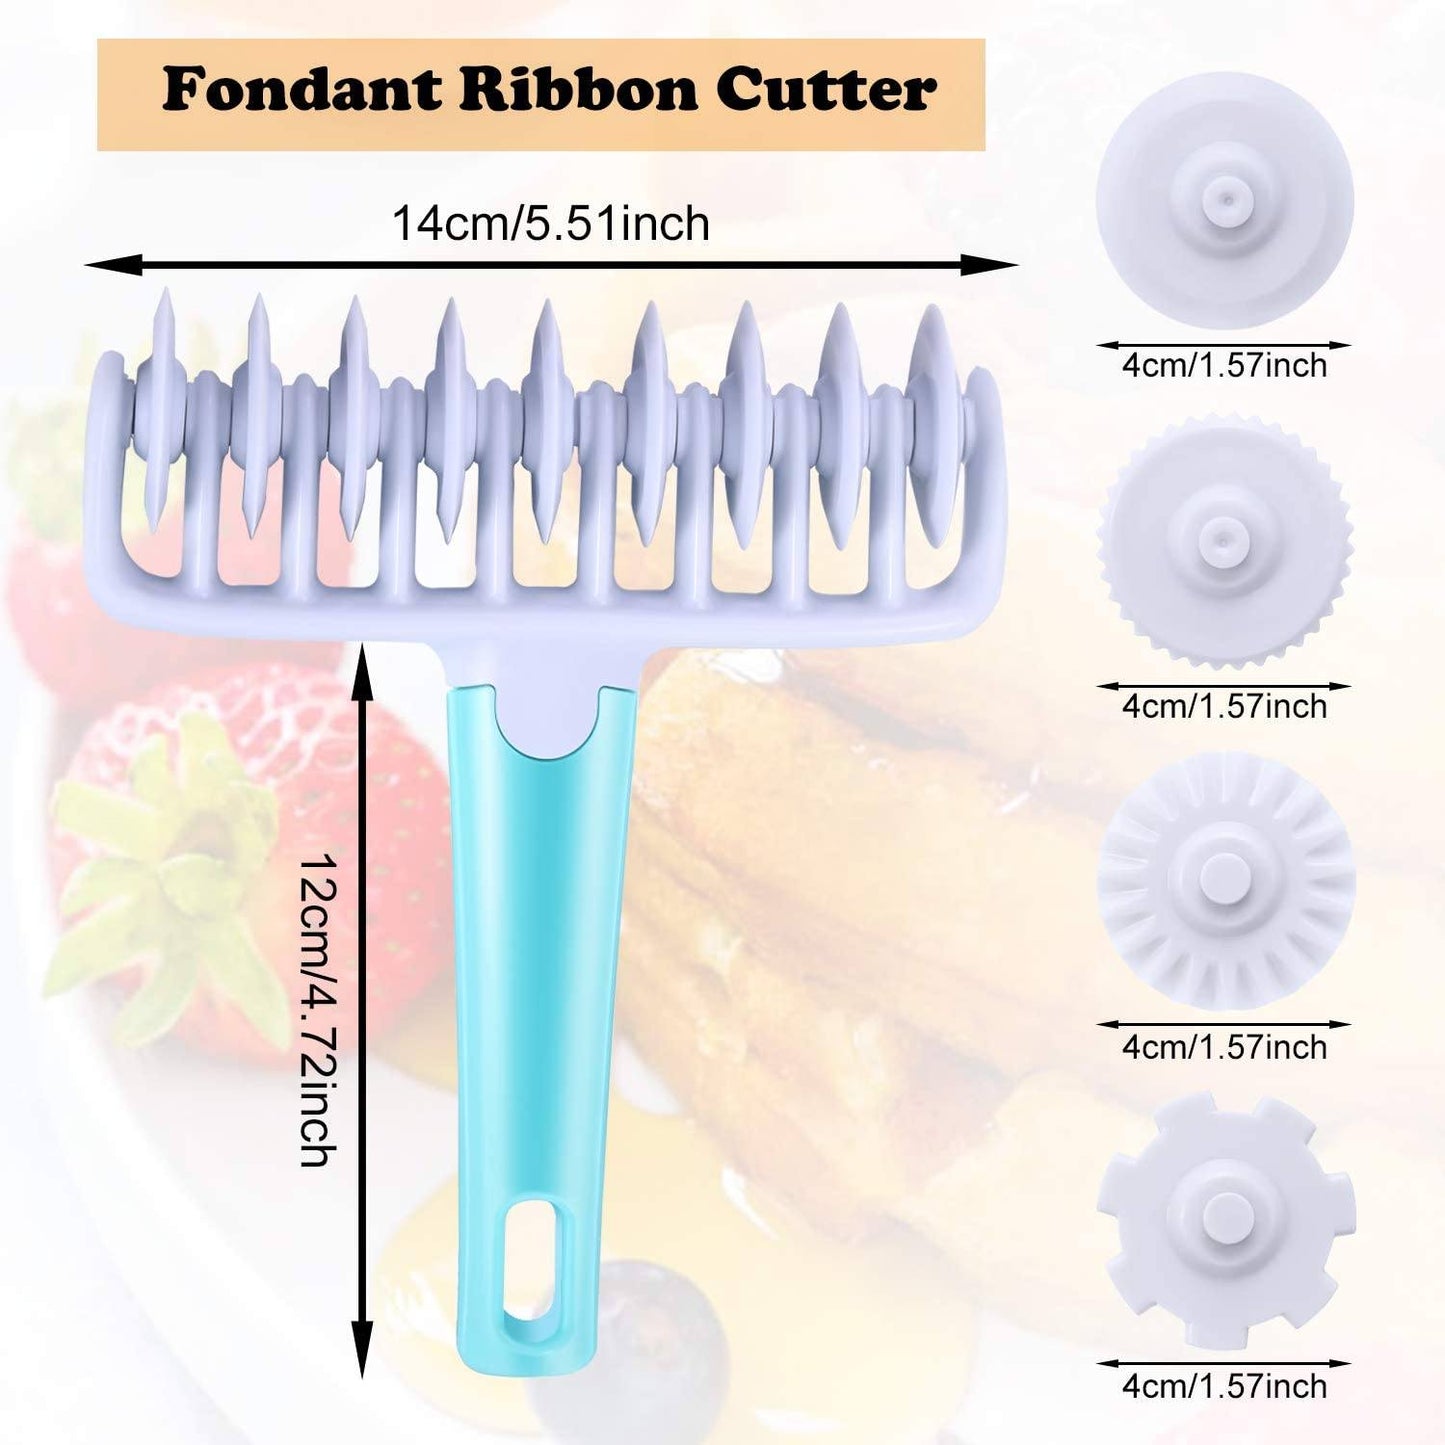 Fondant Ribbon Cutter Wheel Roller Pastry Lattice Cutter